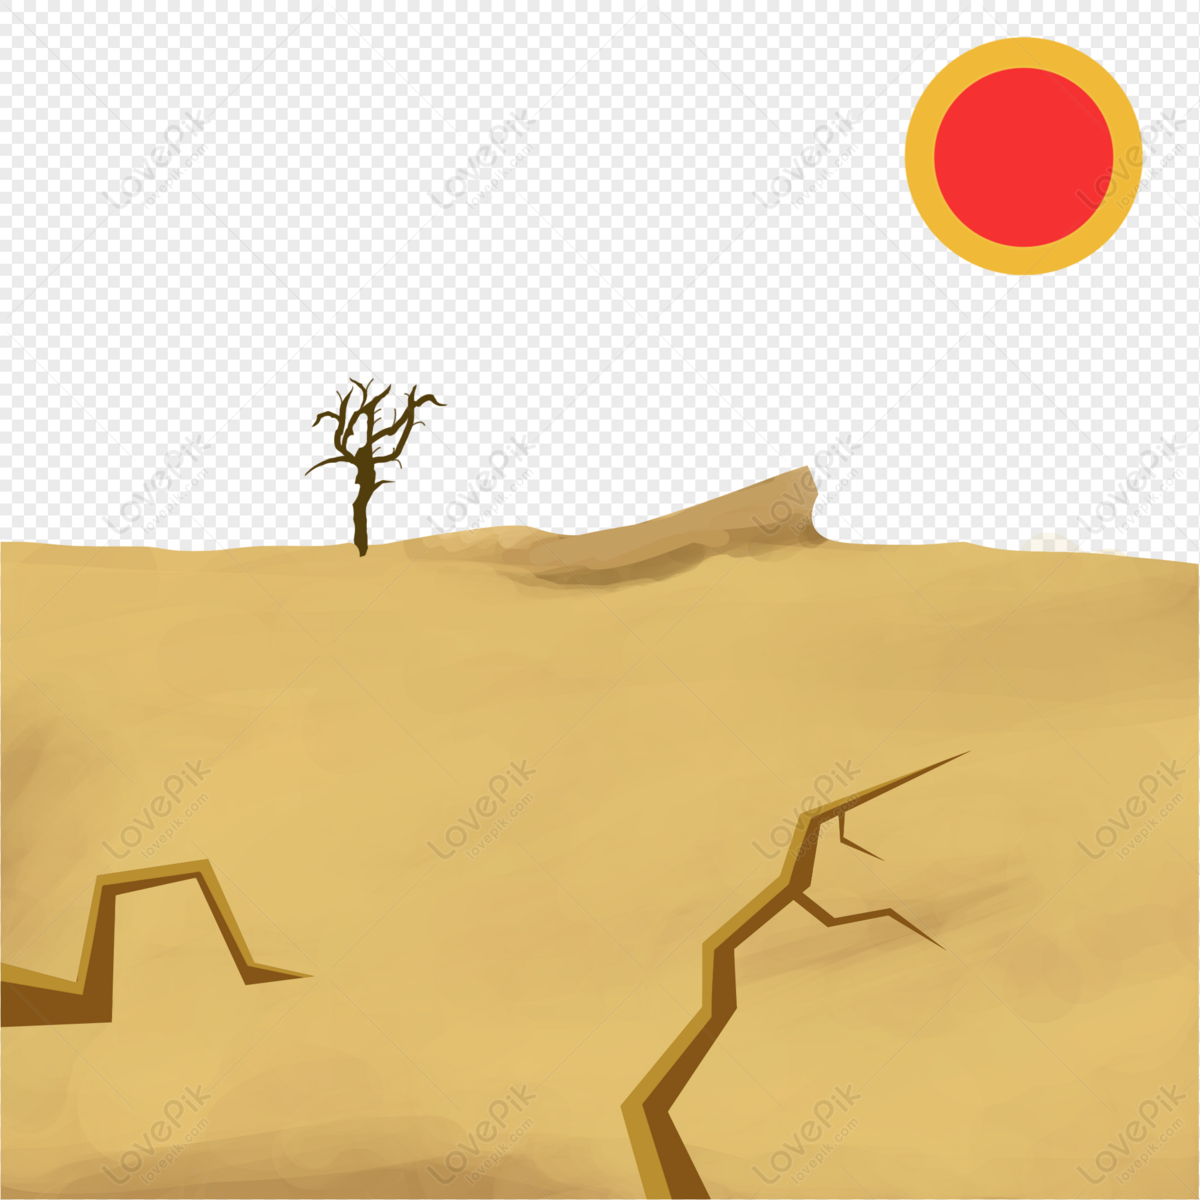 ثانوي العاصفة مجعد  Dry Land Free PNG And Clipart Image For Free Download - Lovepik | 401494619